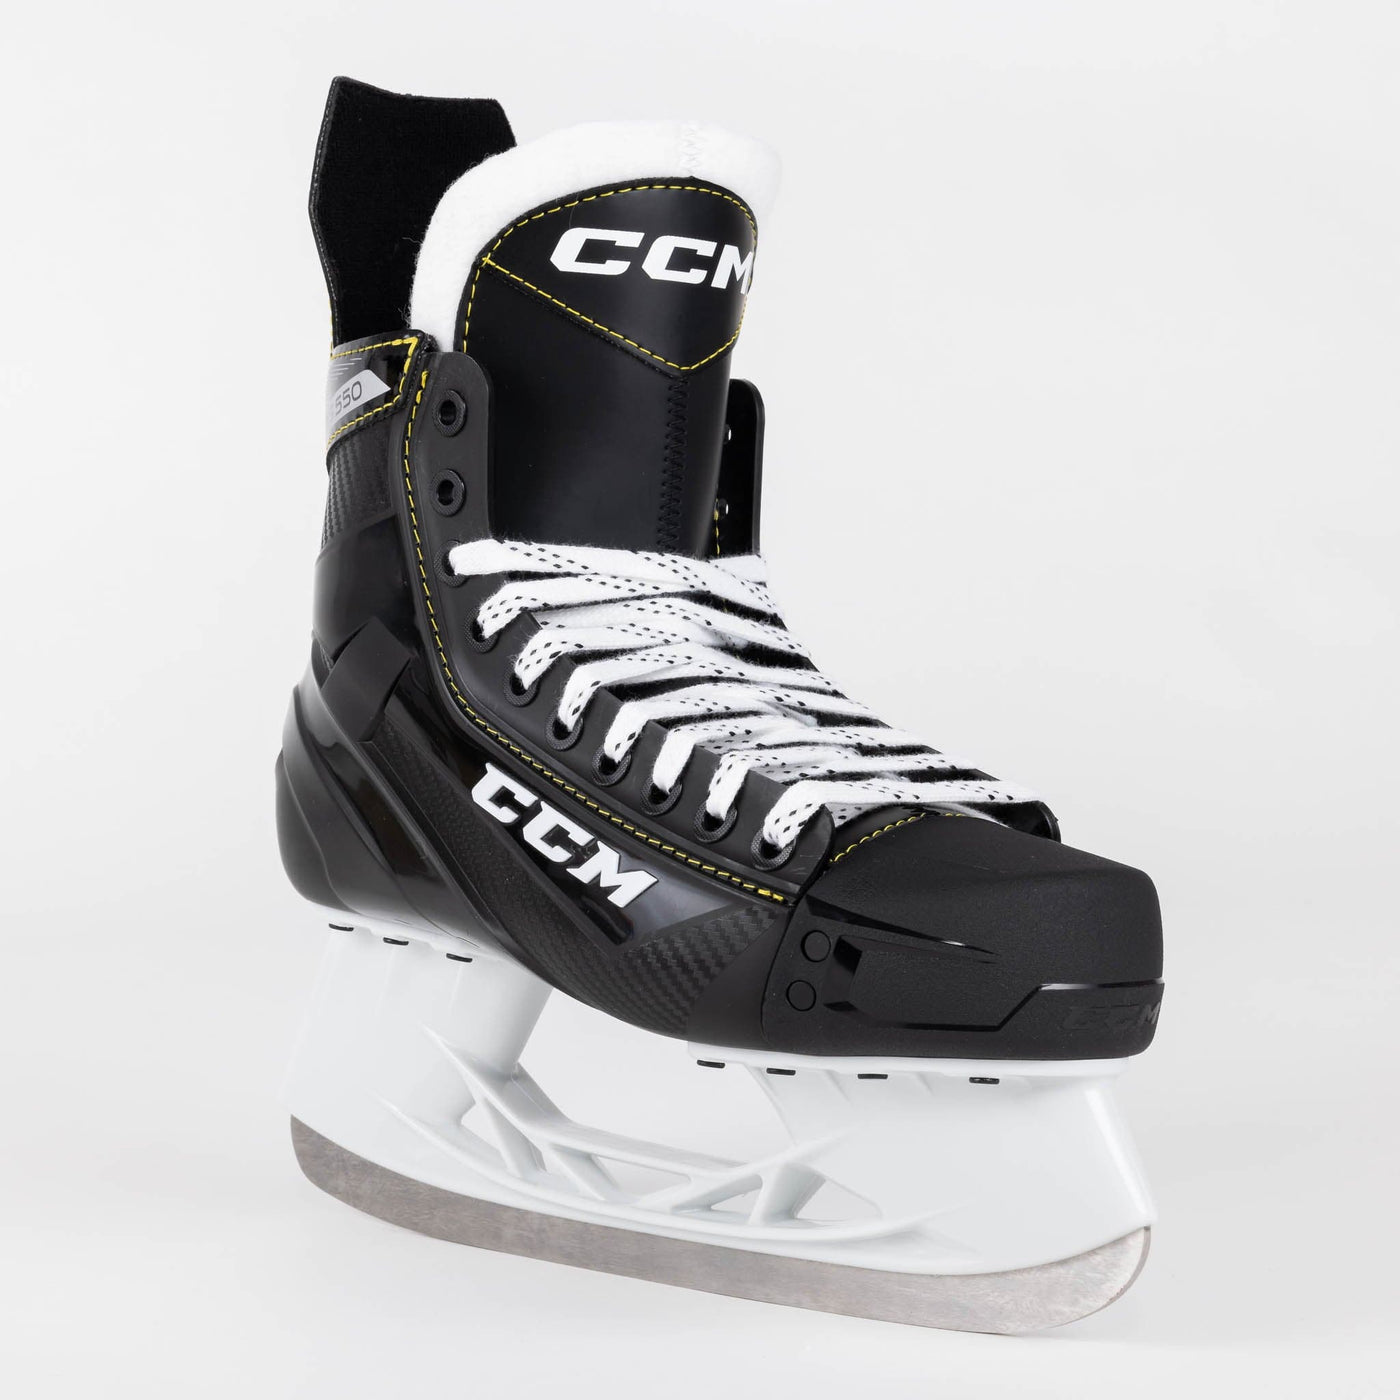 CCM Tacks AS550 Senior Hockey Skates - The Hockey Shop Source For Sports